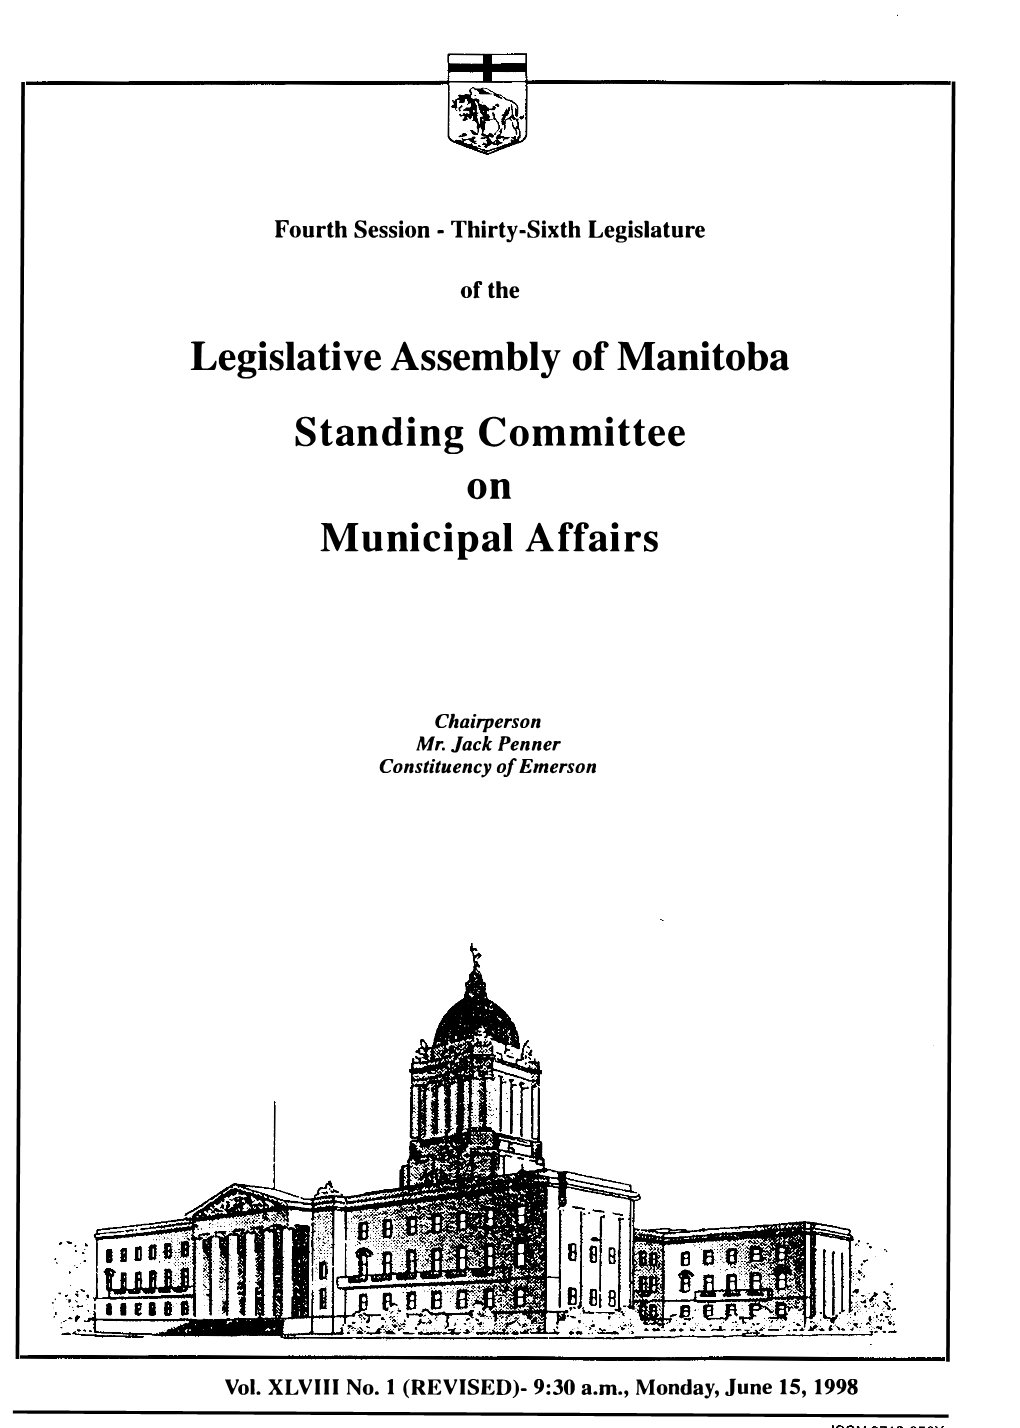 Legislative Assembly of Manitoba Standing Committee on Municipal